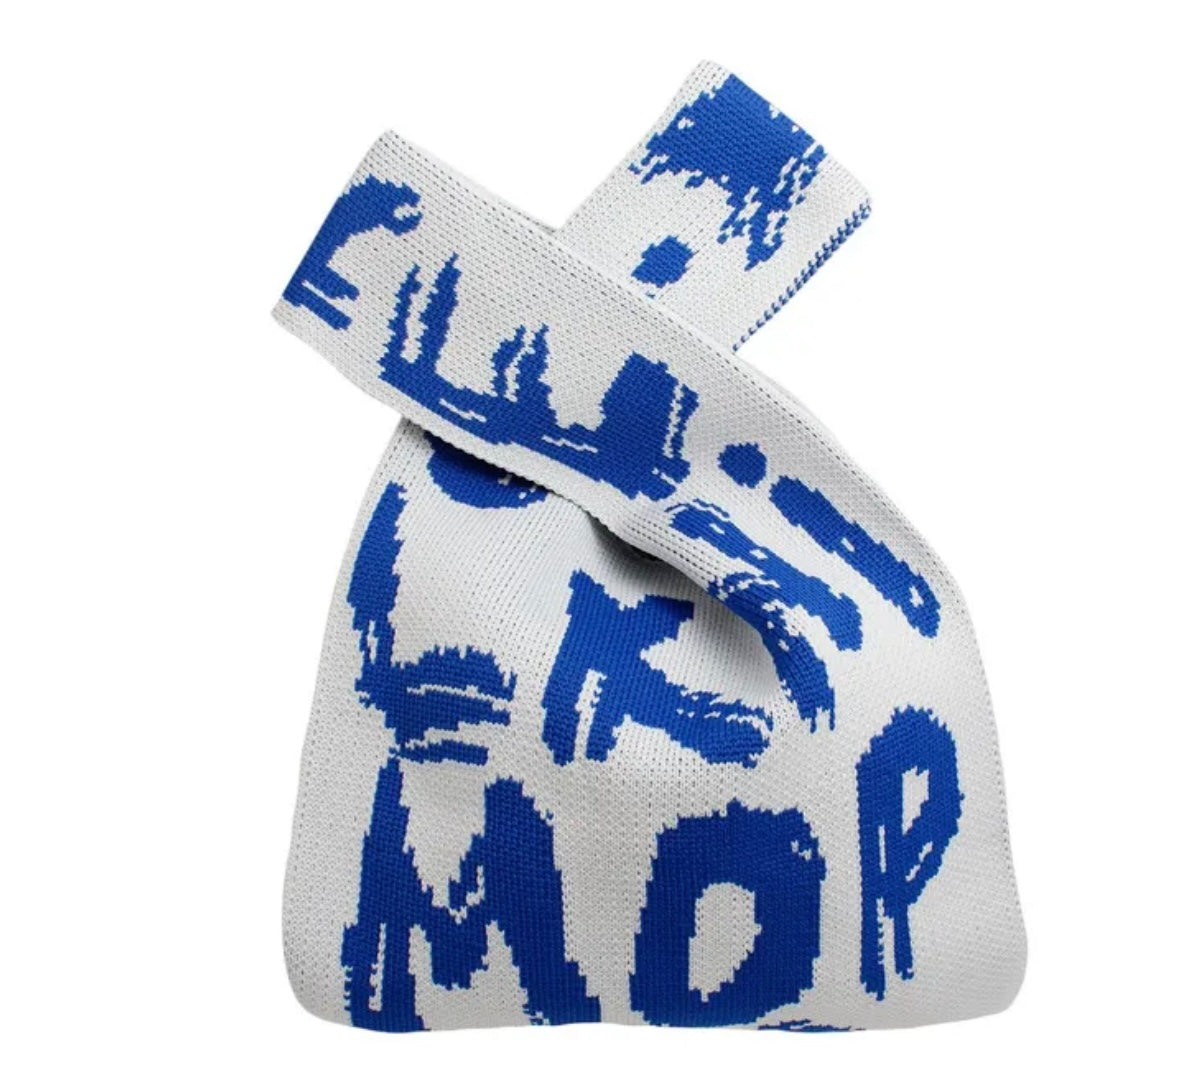 Graffiti Knit Top Handle Handbag/Wristlet/Purse